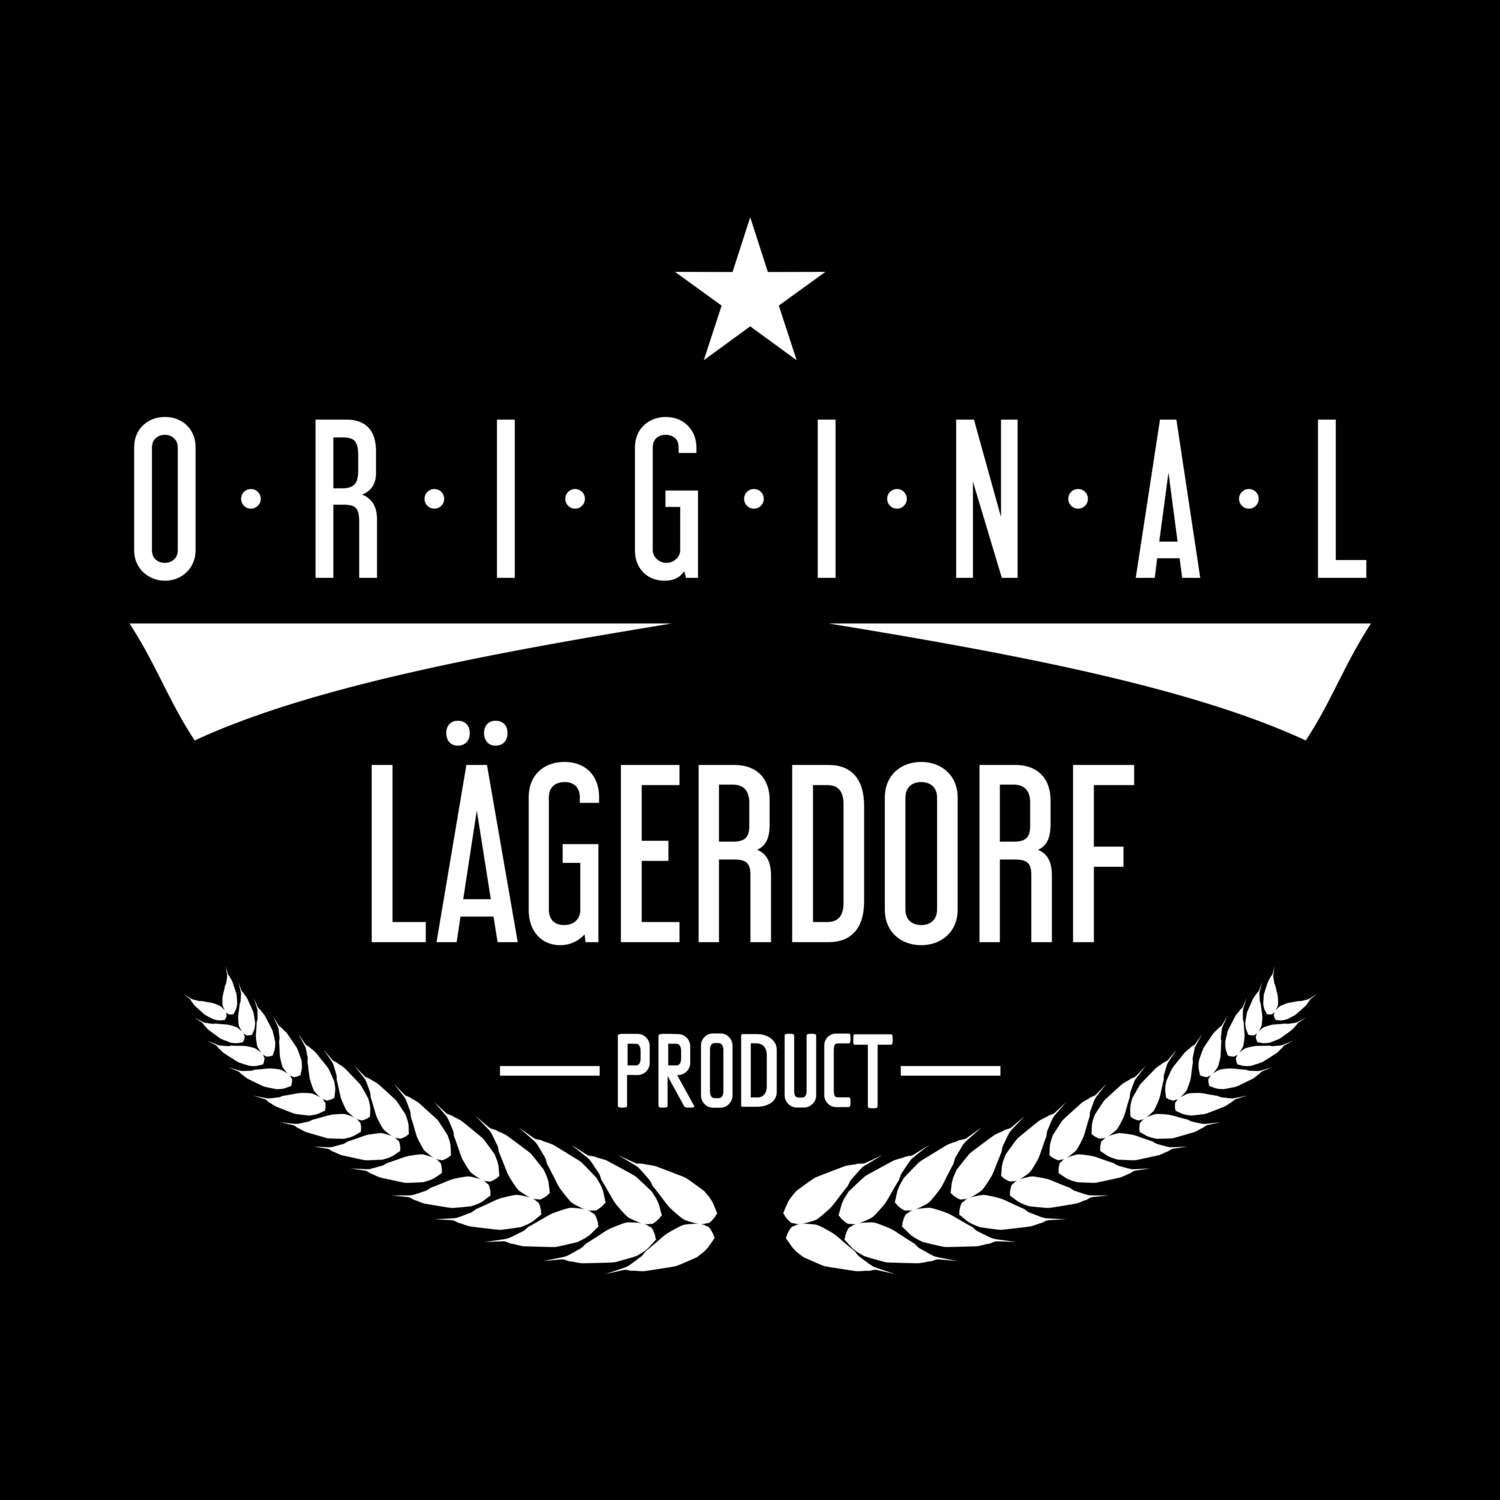 Lägerdorf T-Shirt »Original Product«